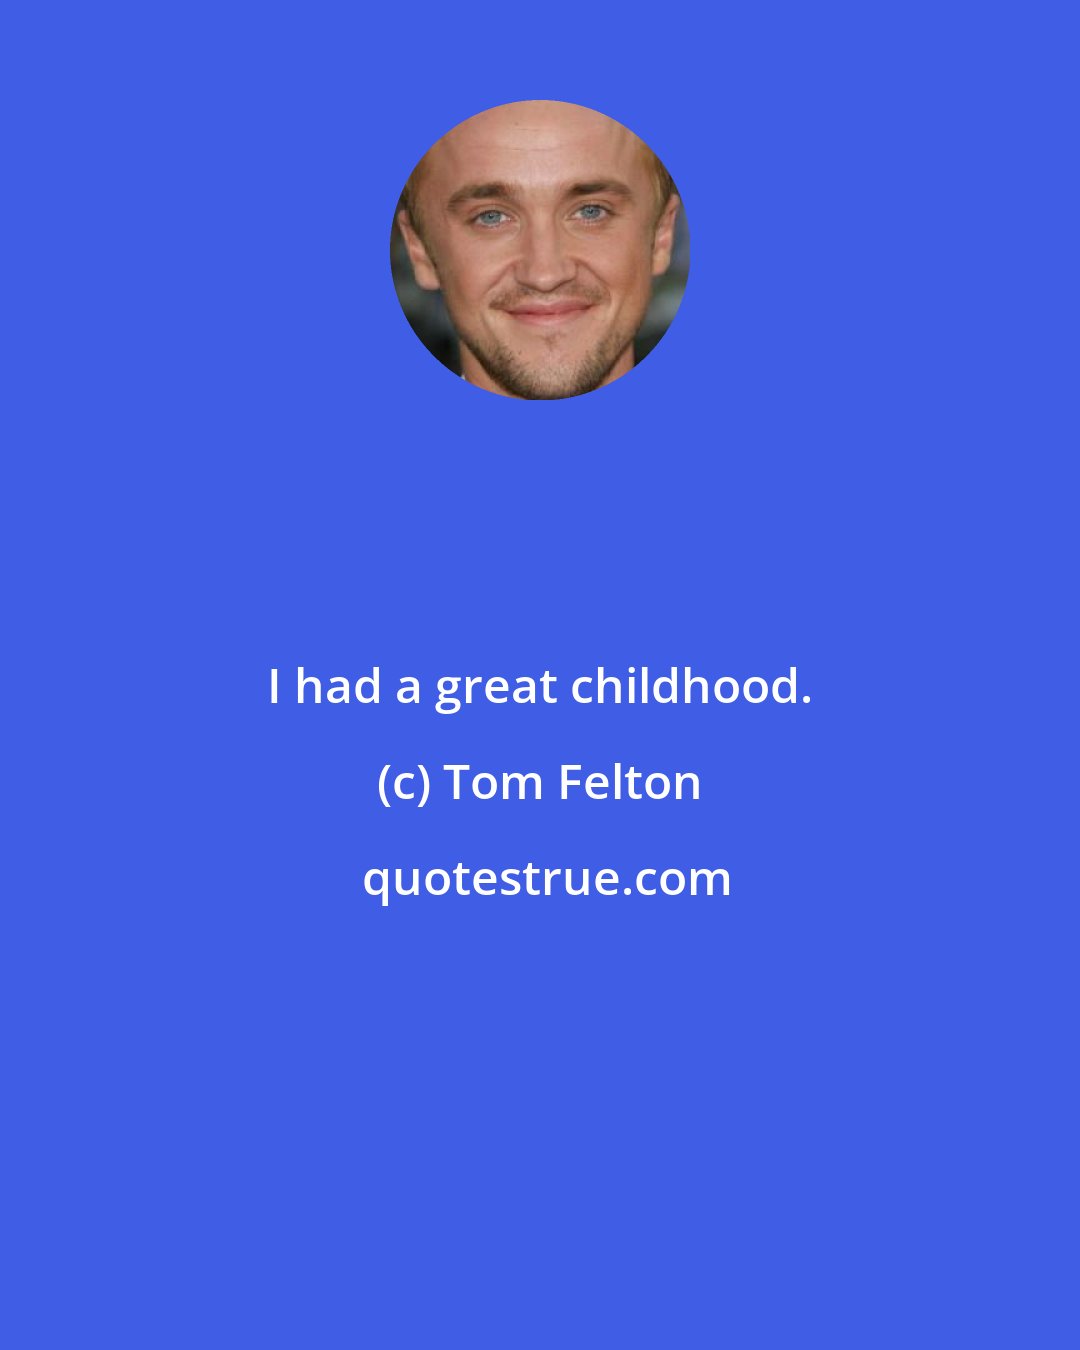 Tom Felton: I had a great childhood.